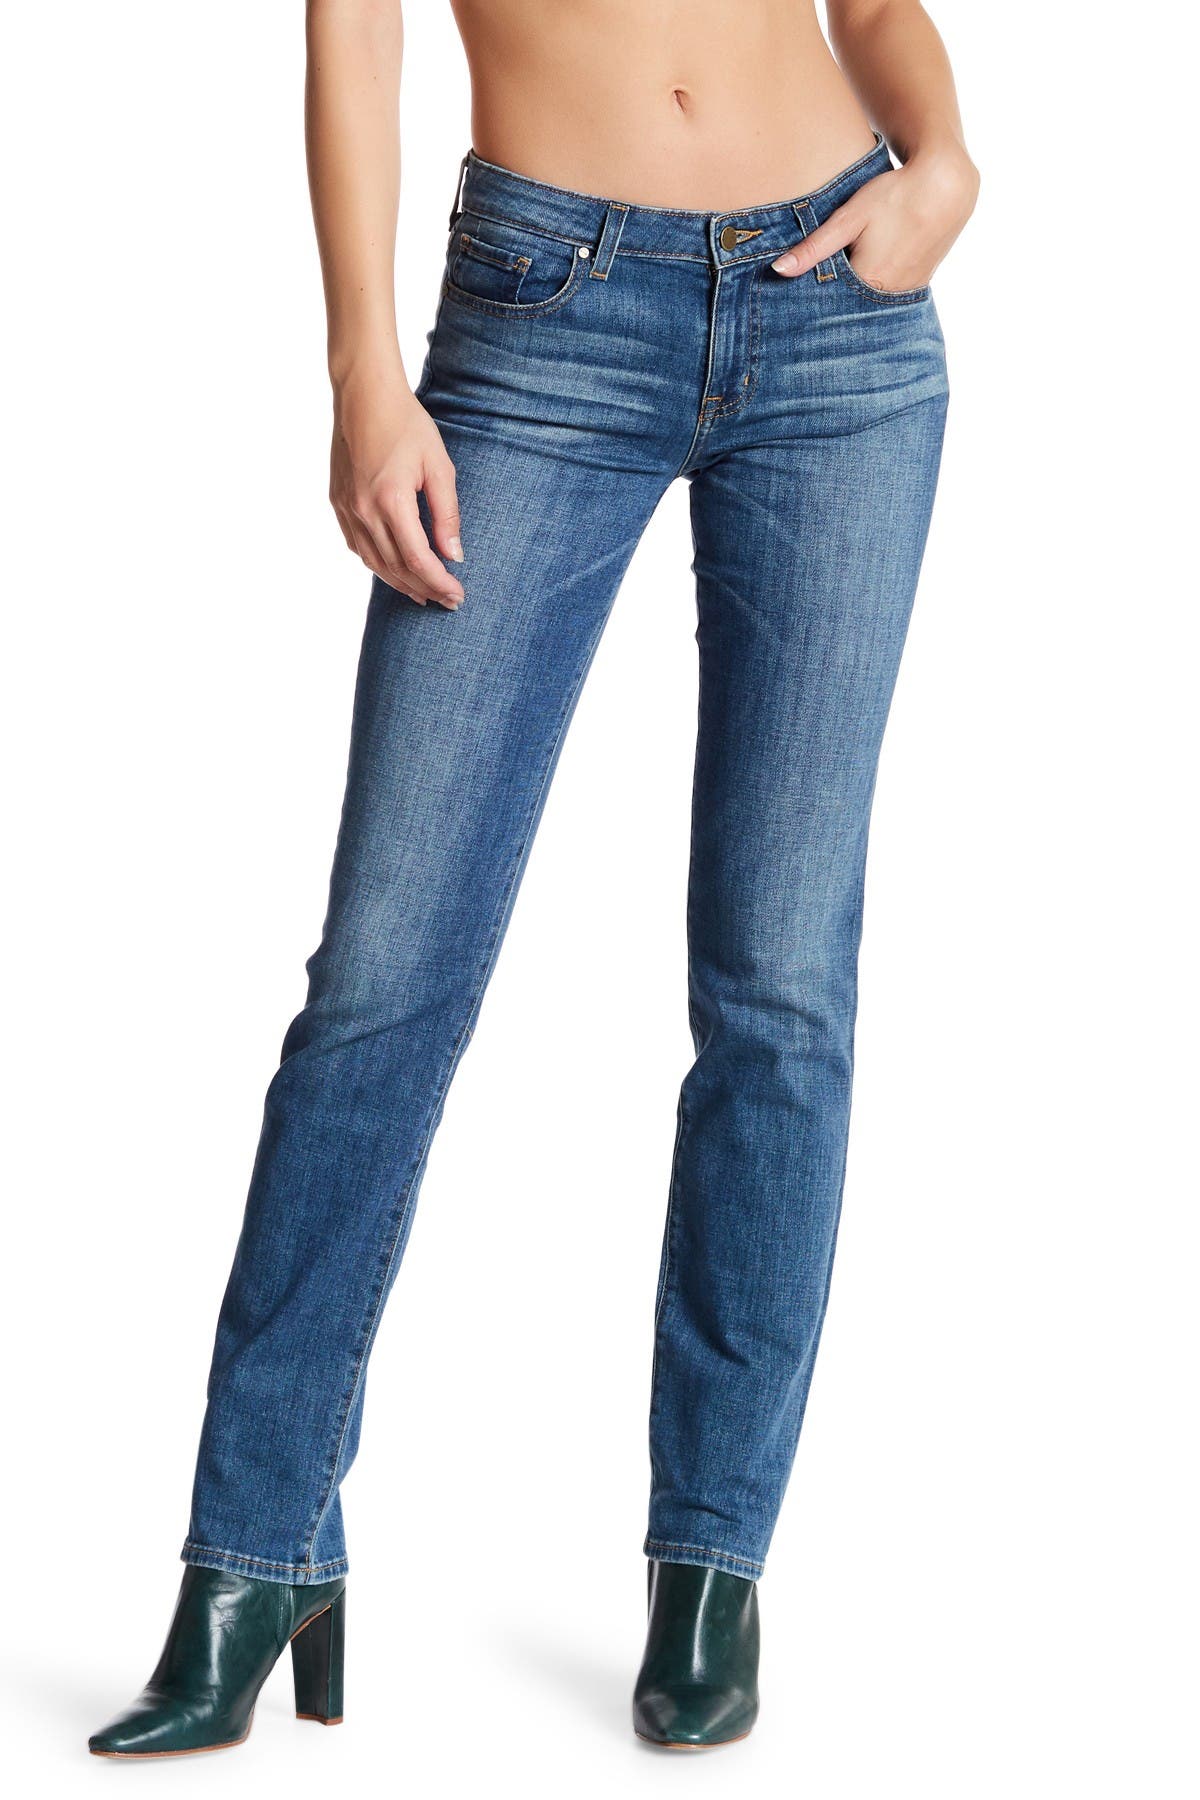 levi's 535 skinny jeans